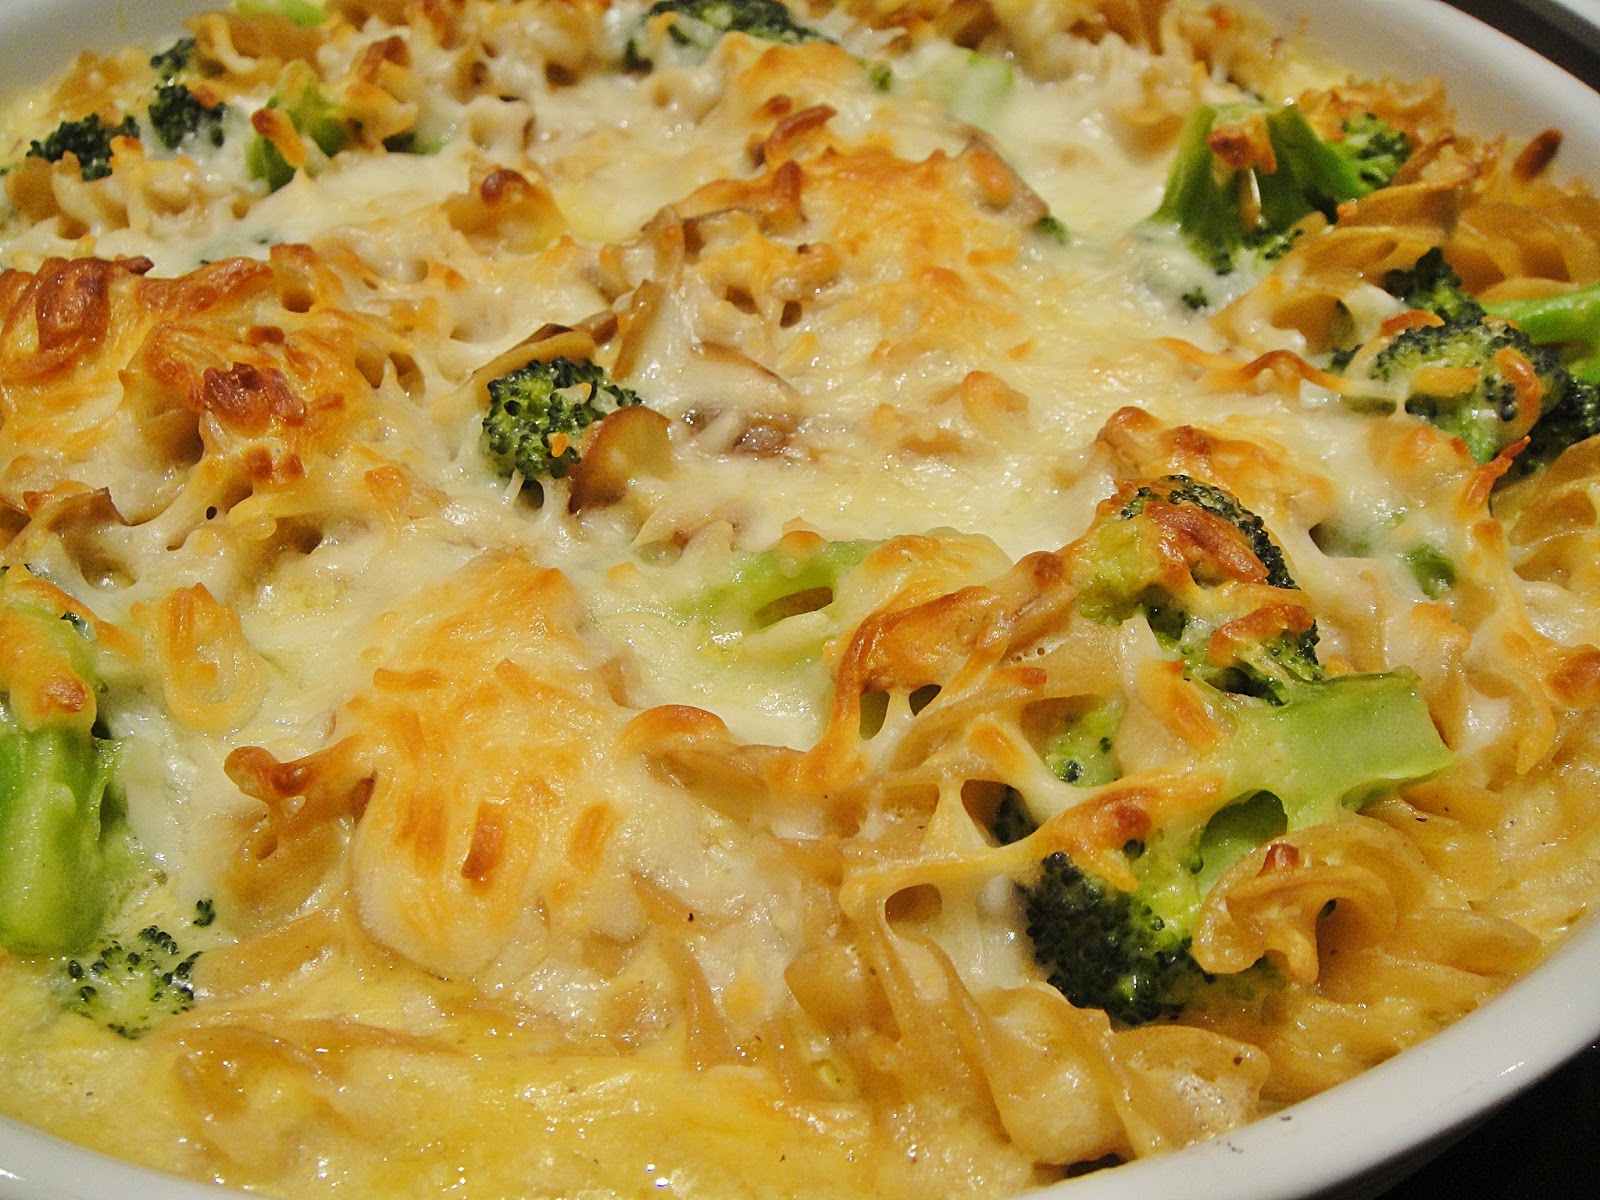 Maryam's Culinary Wonders: 847. Broccoli Mushroom Pasta Bake